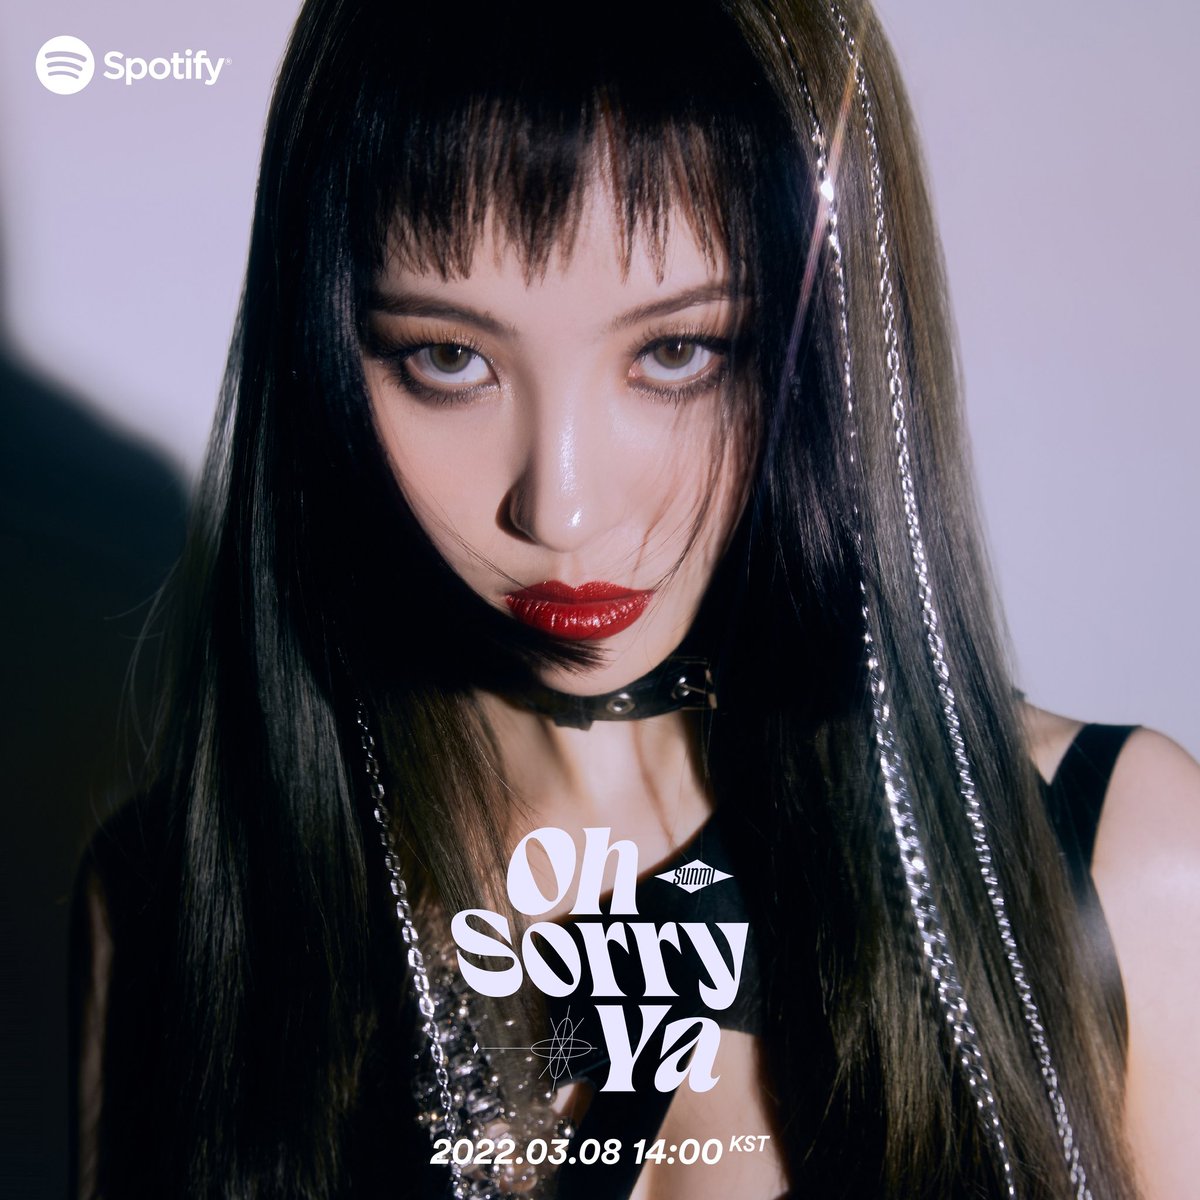 SUNMI 🪩 Oh Sorry Ya
concept/teaser photo

_
_
#SUNMI #선미 #LeeSunmi #이선미 
#Miyane #Spotify_Singles
#EQUAL #Oh_Sorry_Ya